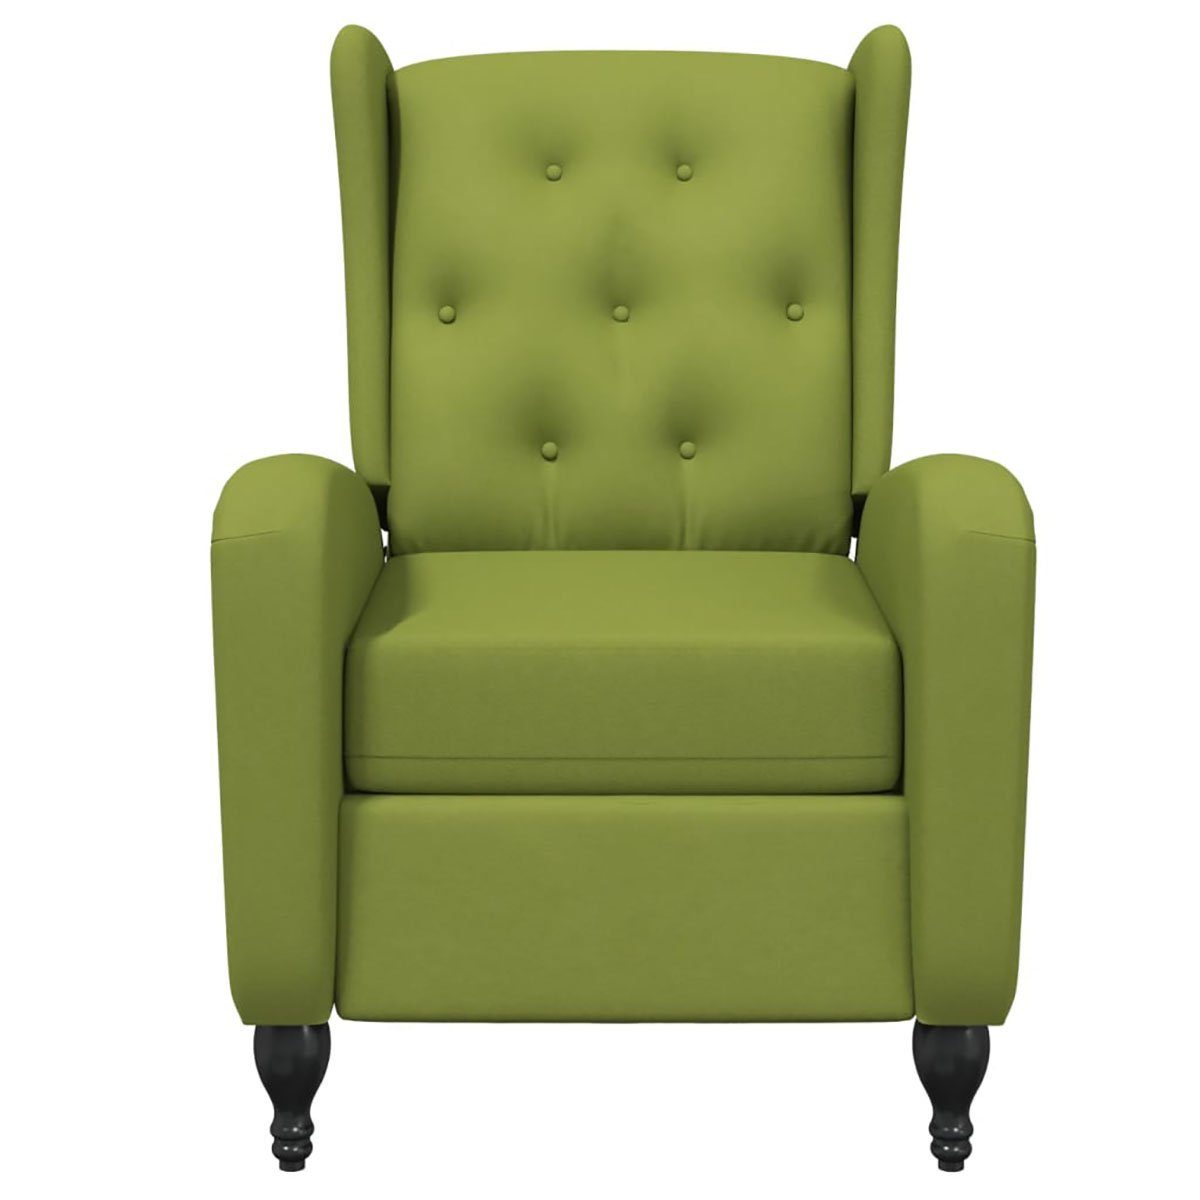 DOTMALL Massage-Liegestuhl Samt aus Stuhl hellgrünem